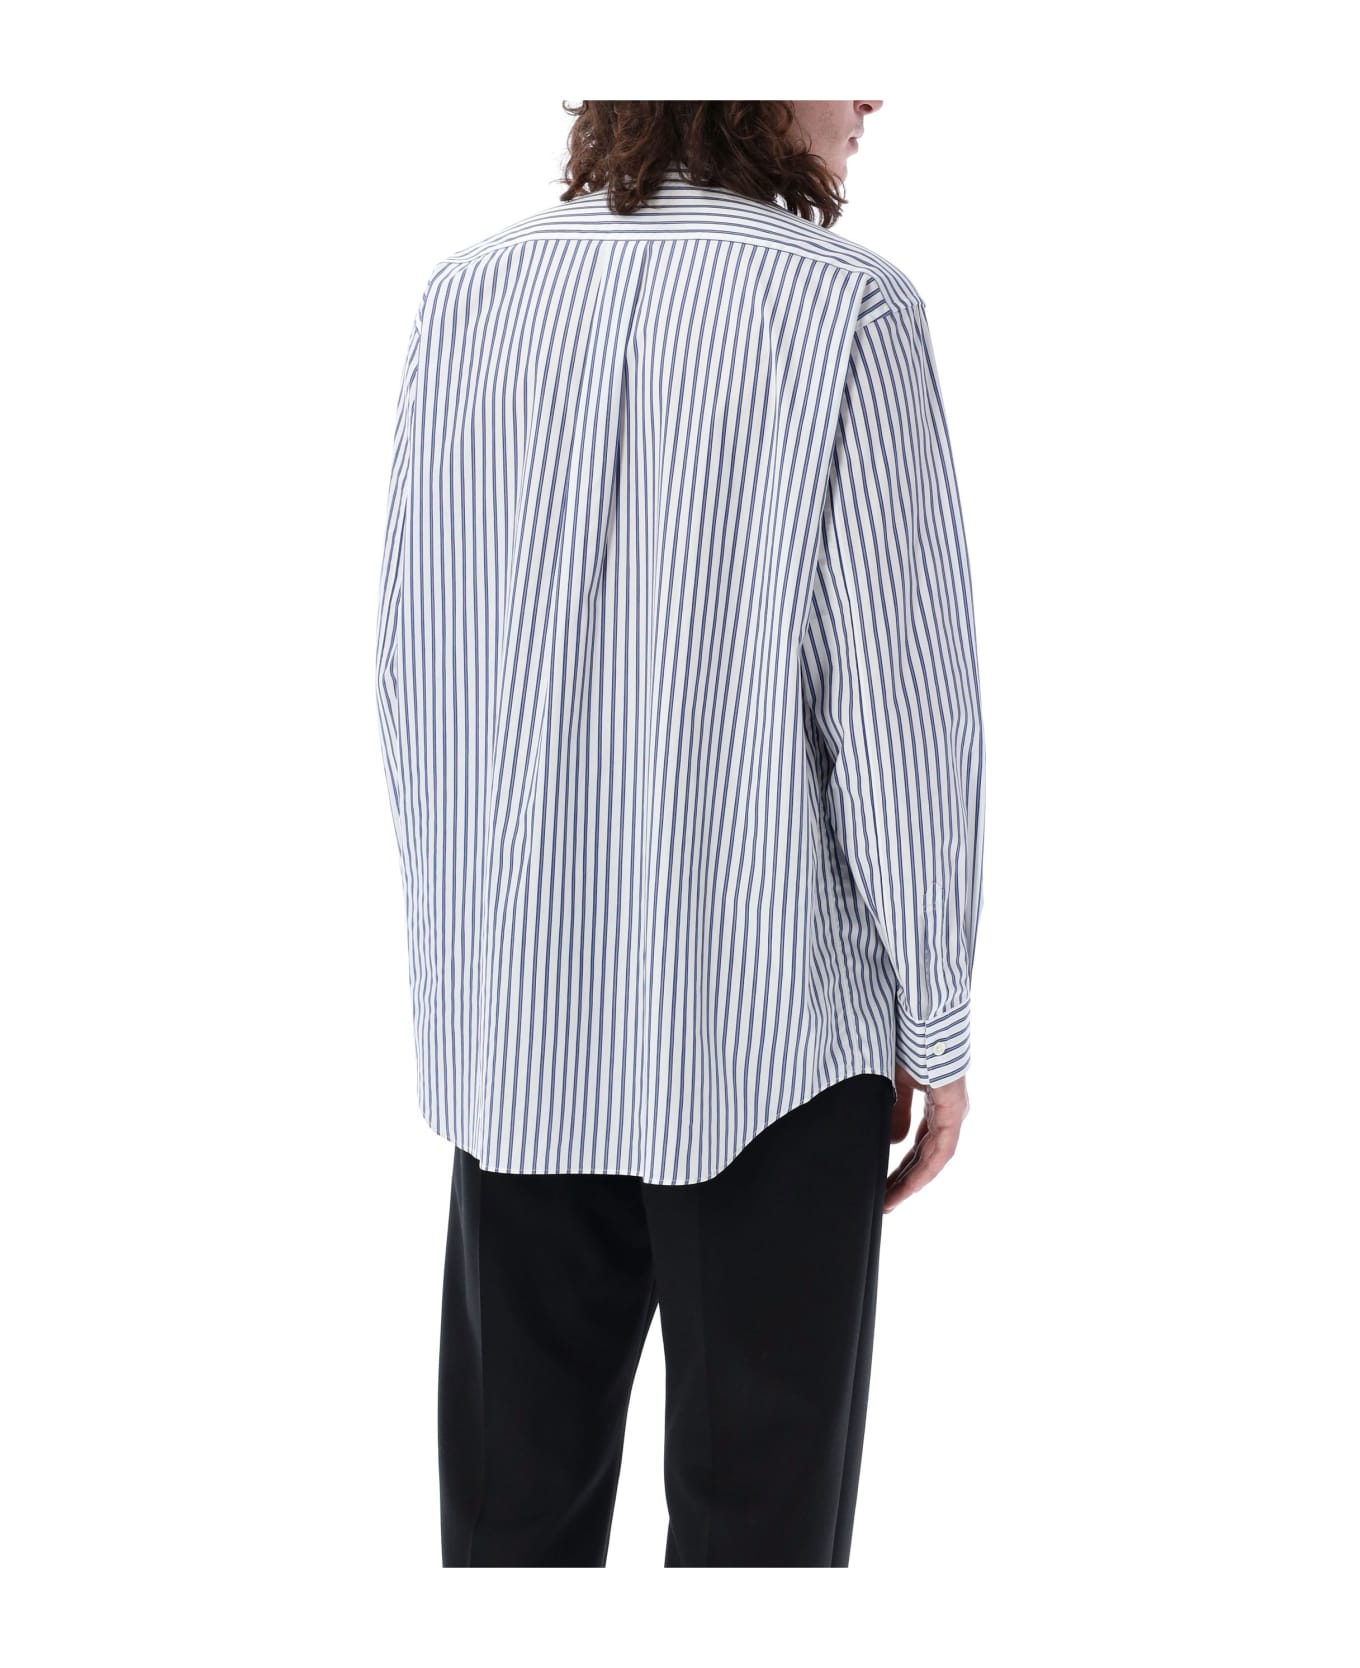 Comme des Garçons Shirt Striped Shirt - WHITE BLUE シャツ